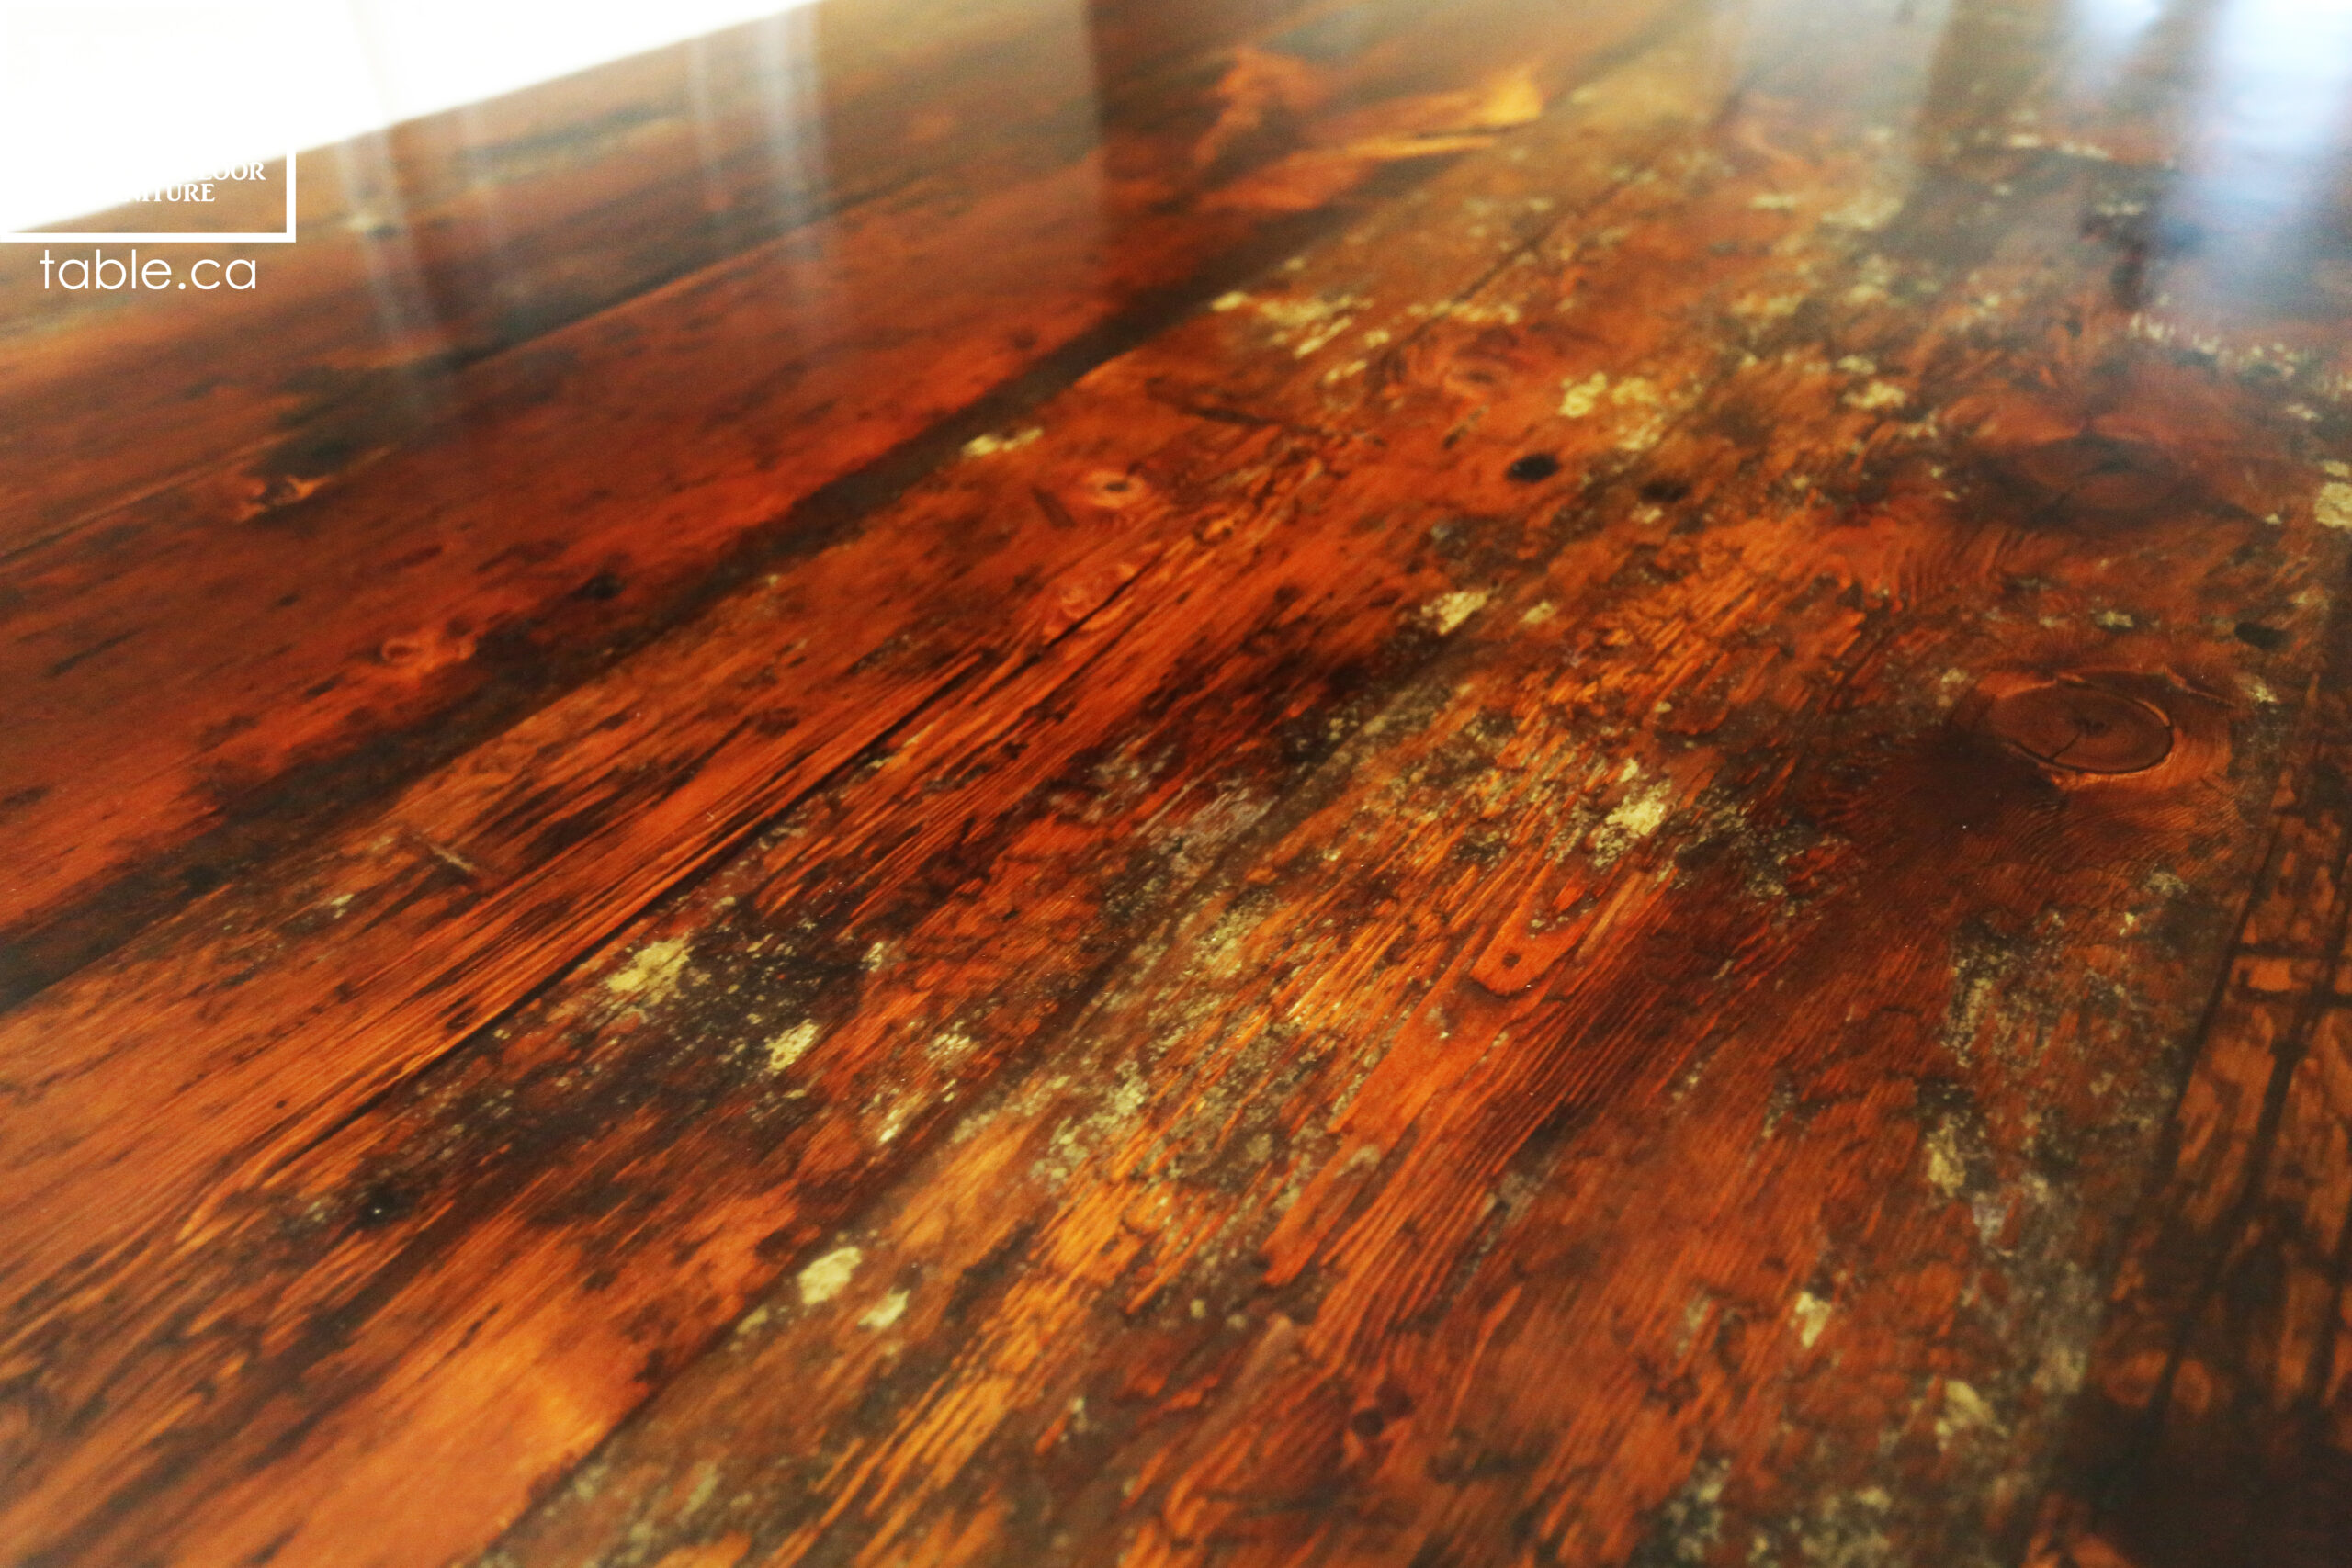 Rustic Table by HD Threshing Floor Furniture / www.table.ca